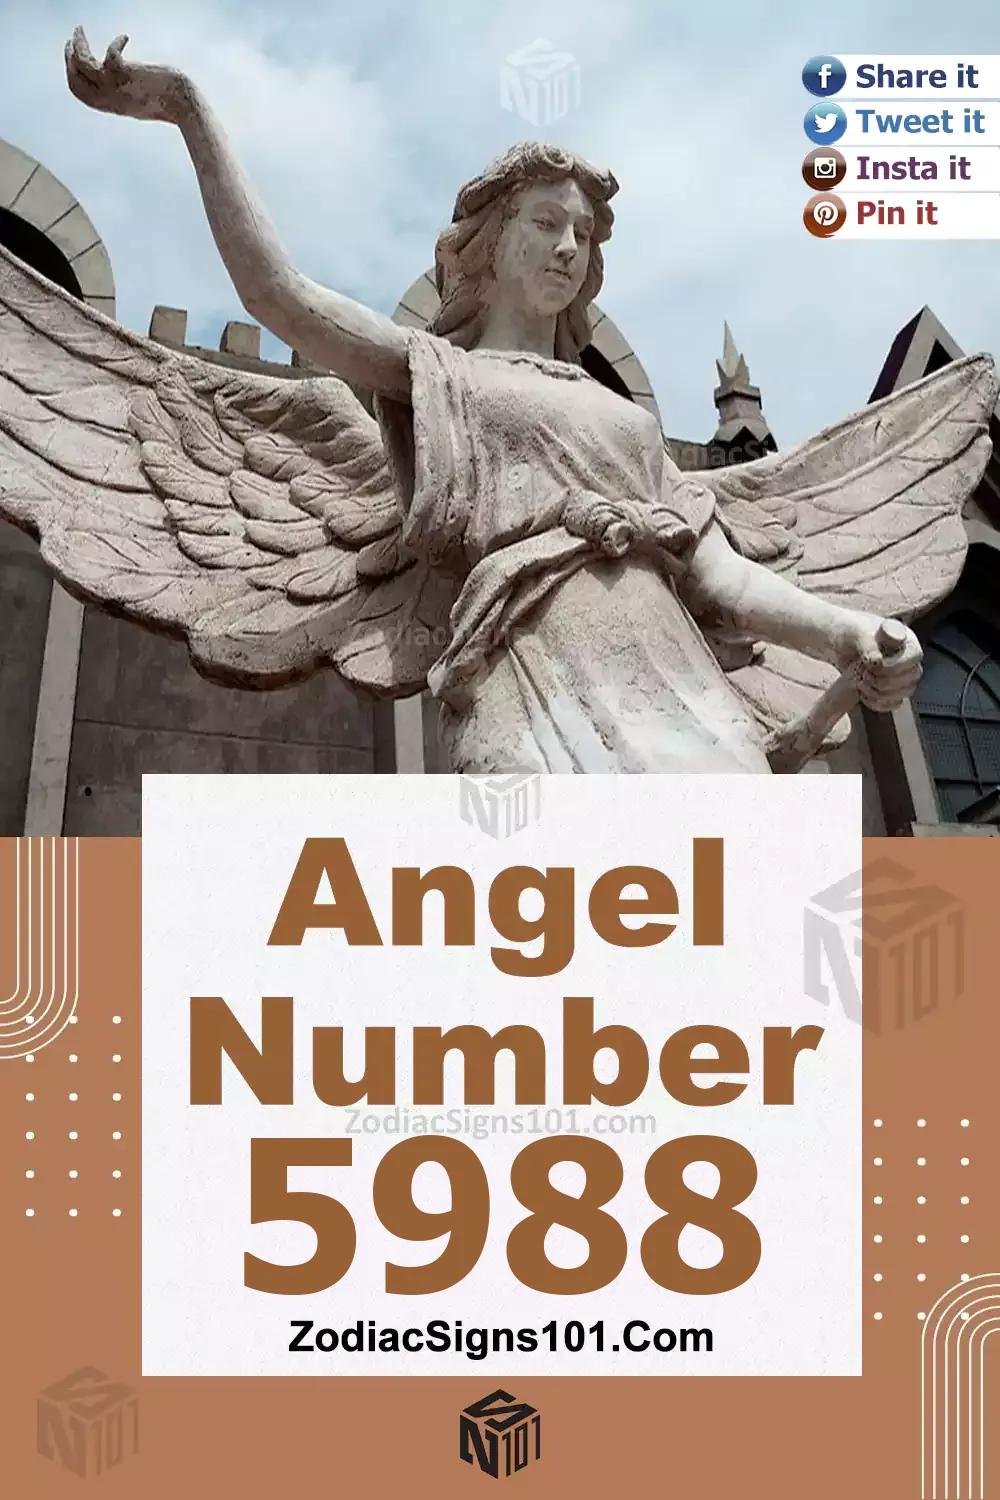 5988-Angel-Number-Meaning.jpg